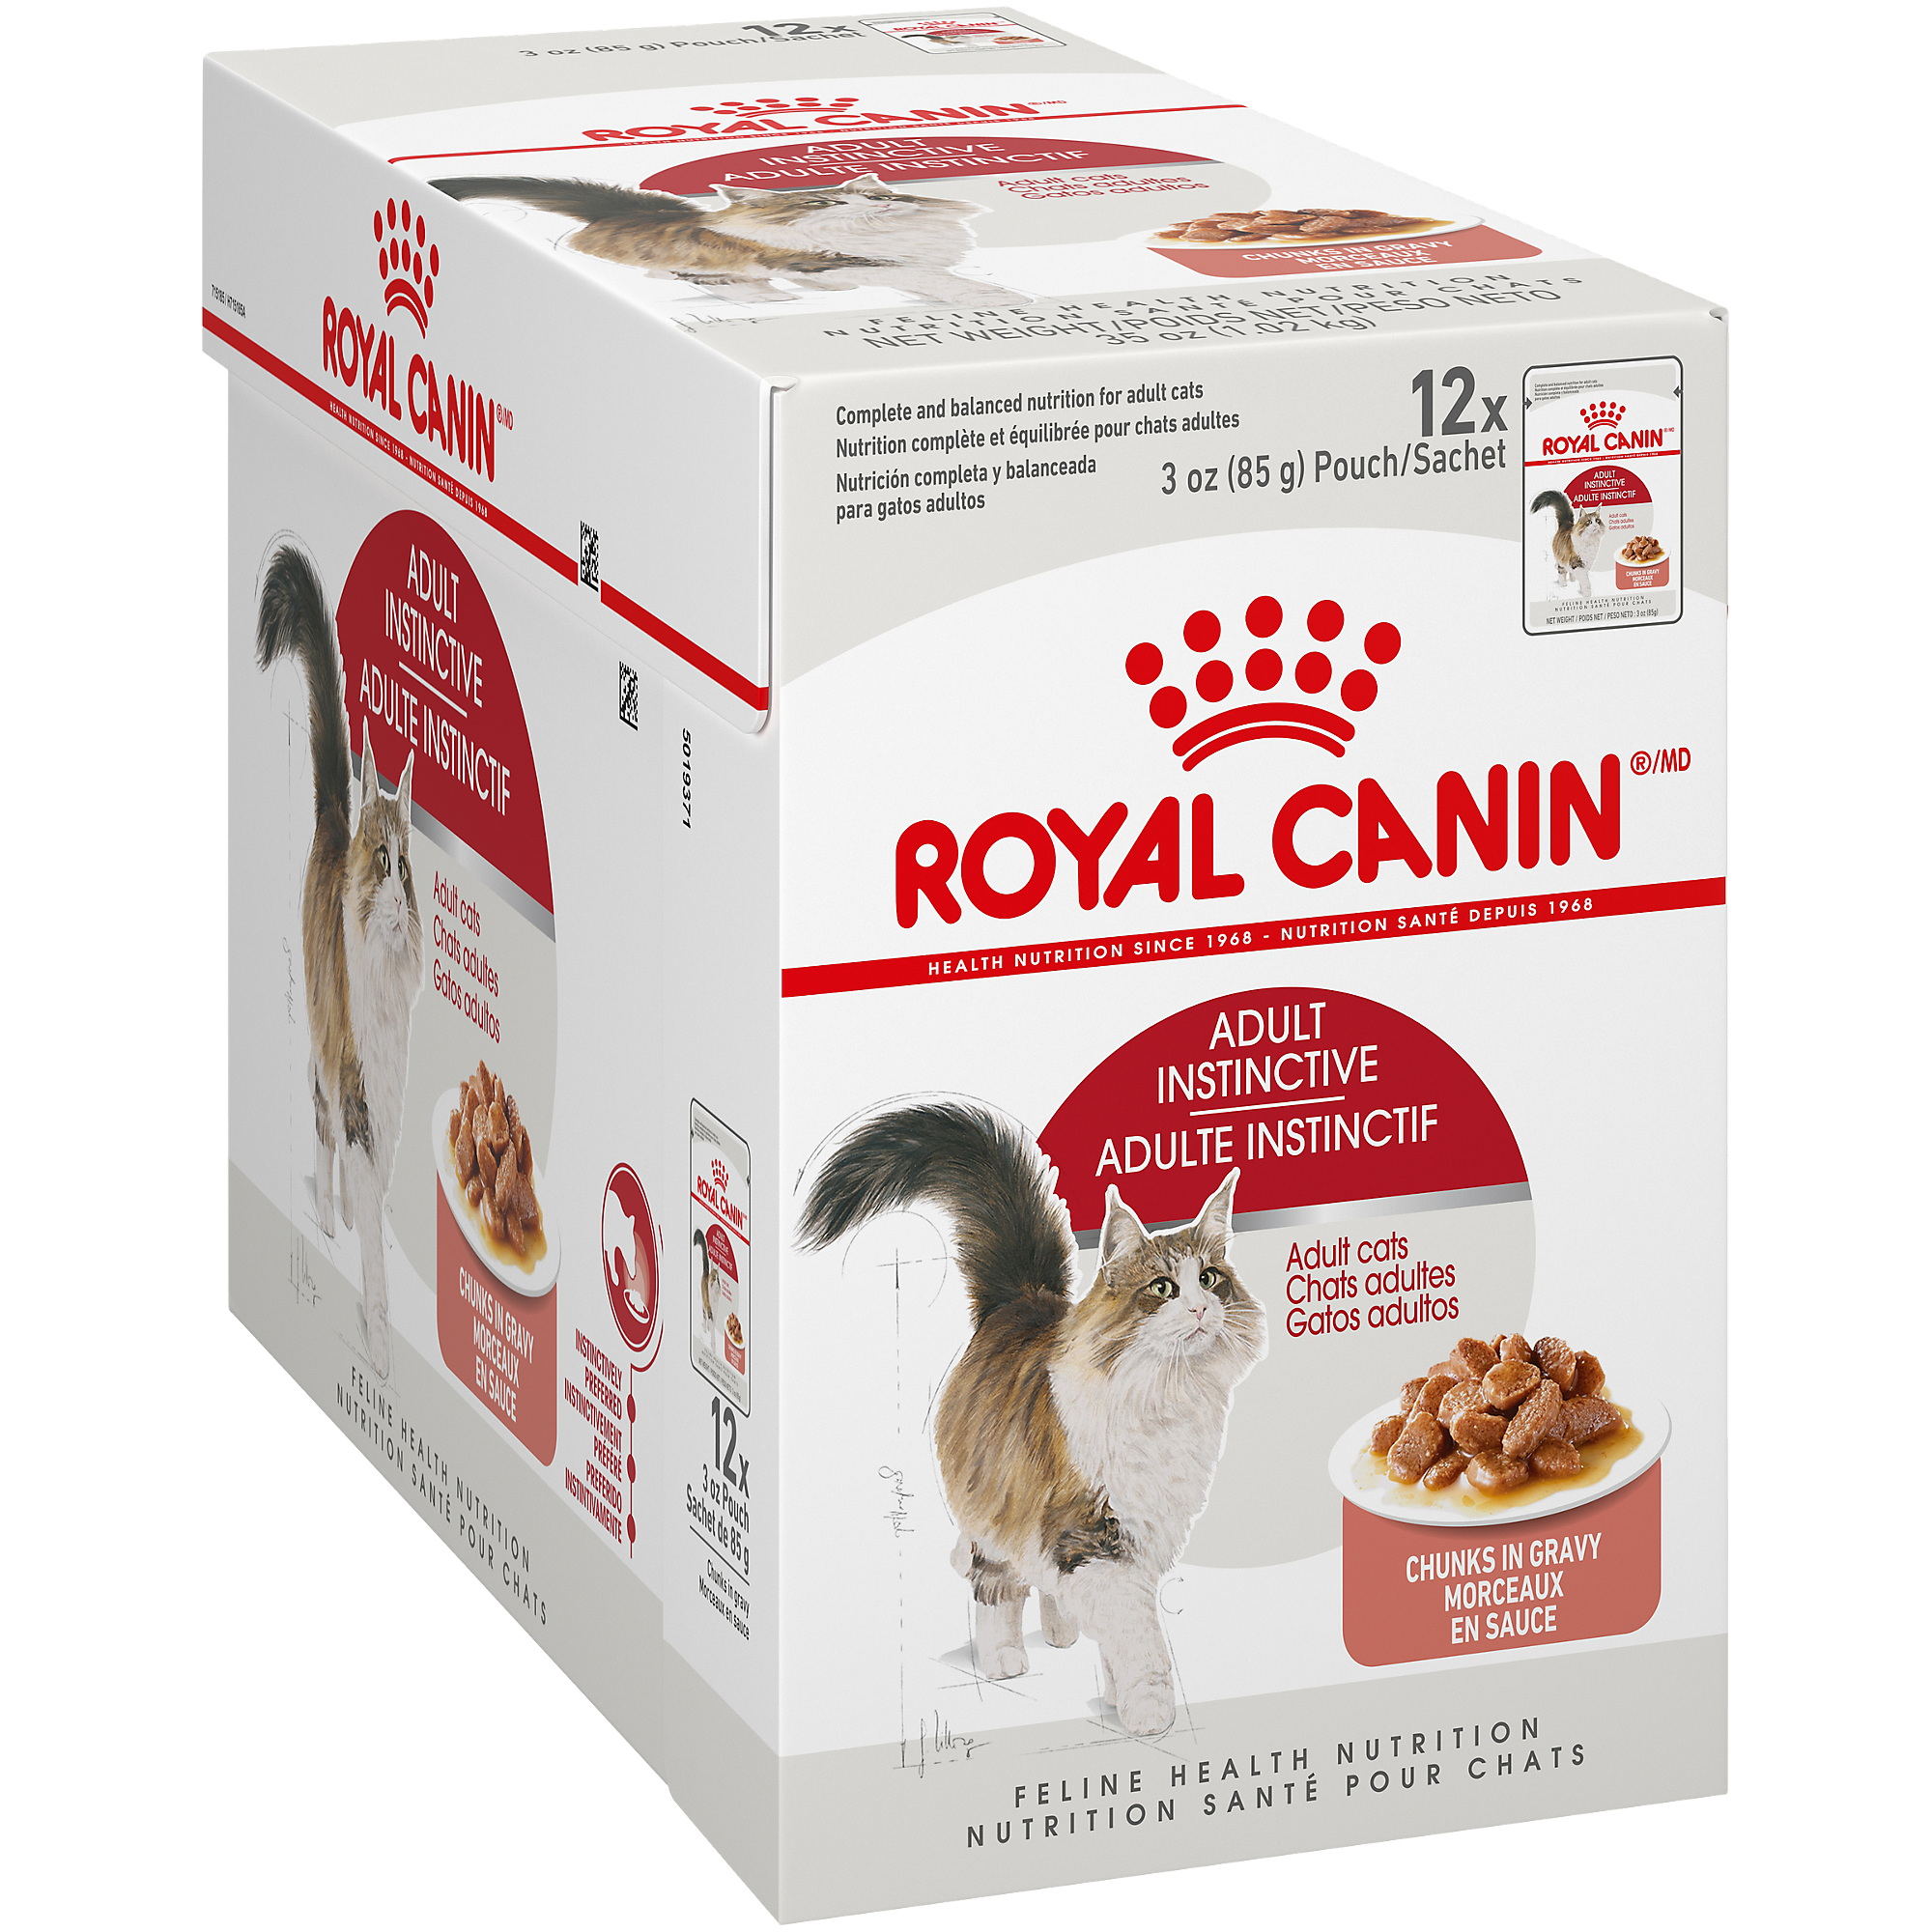 Royal Canin® Feline Health Nutrition™ Adult Instinctive Chunks in Gravy Pouch Cat Food, 3 oz, 12-pack